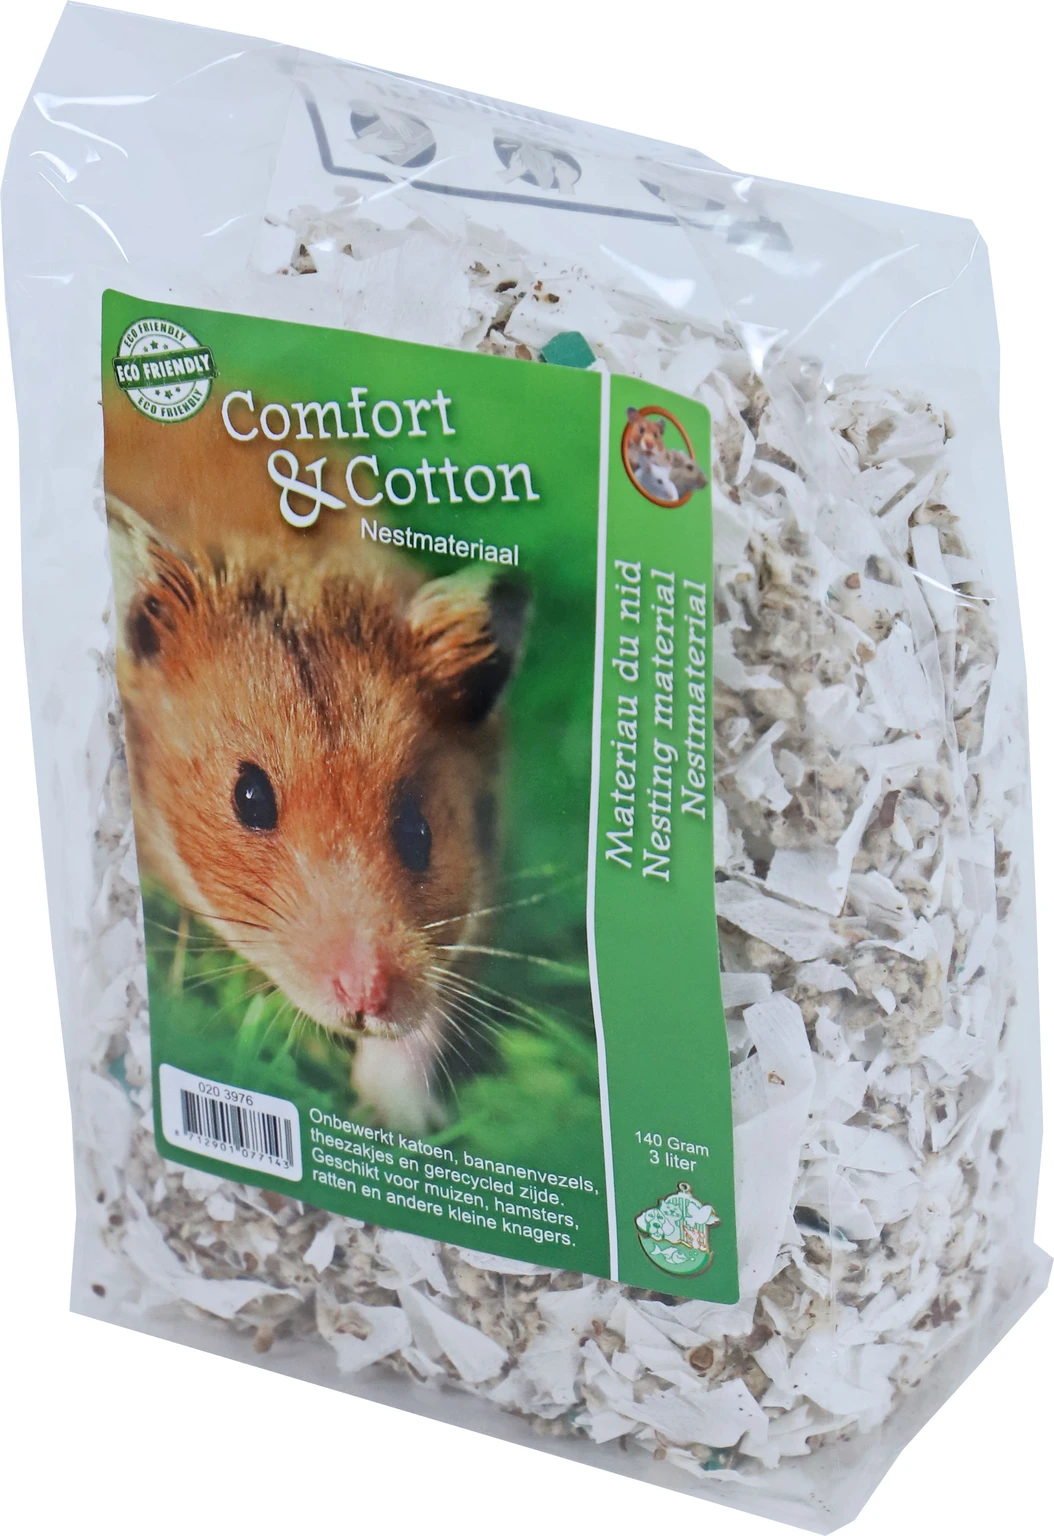 Boon Eco friendly nestmateriaal comfort & cotton 140 gram